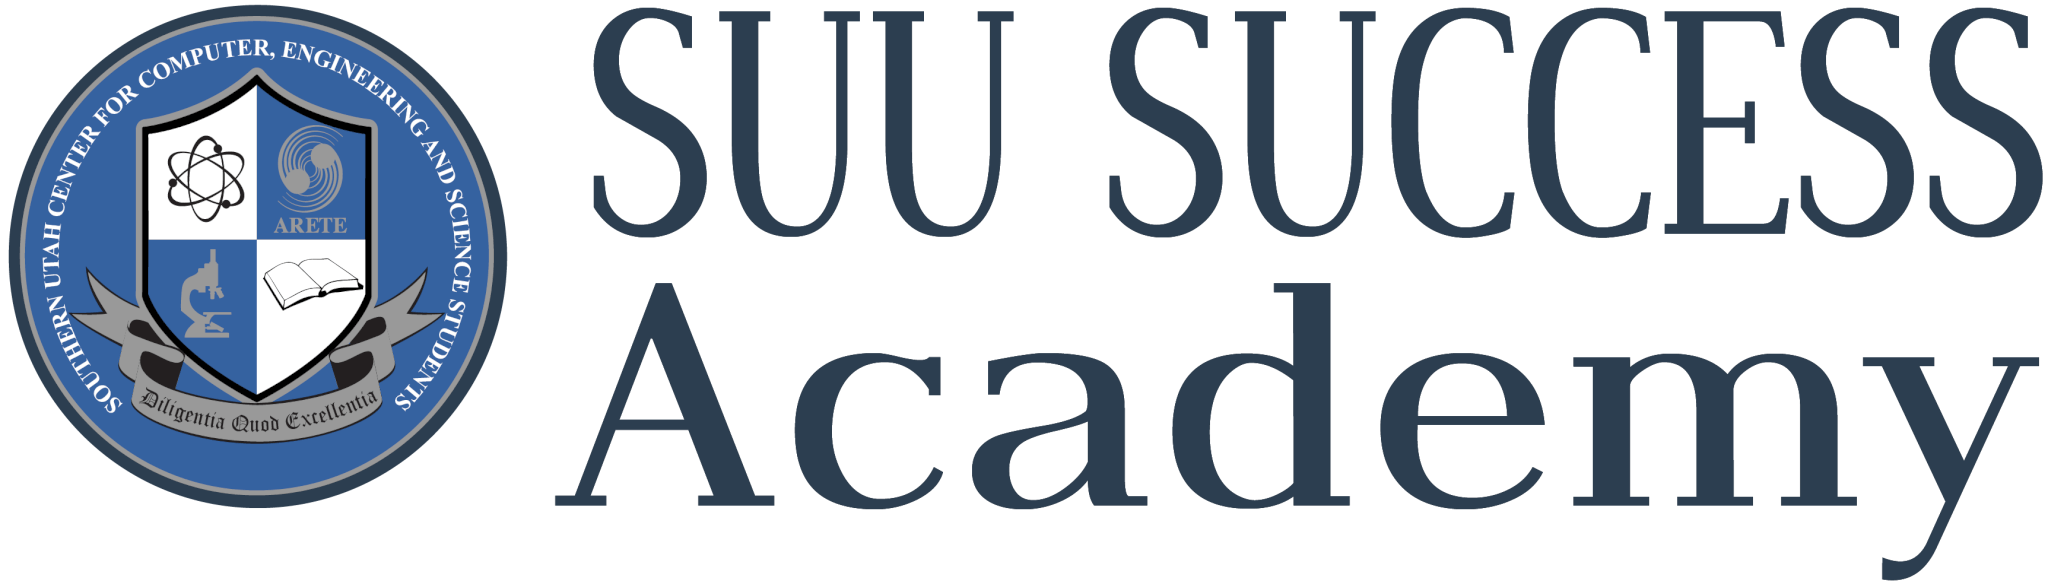 SUU SUCCESS Logo